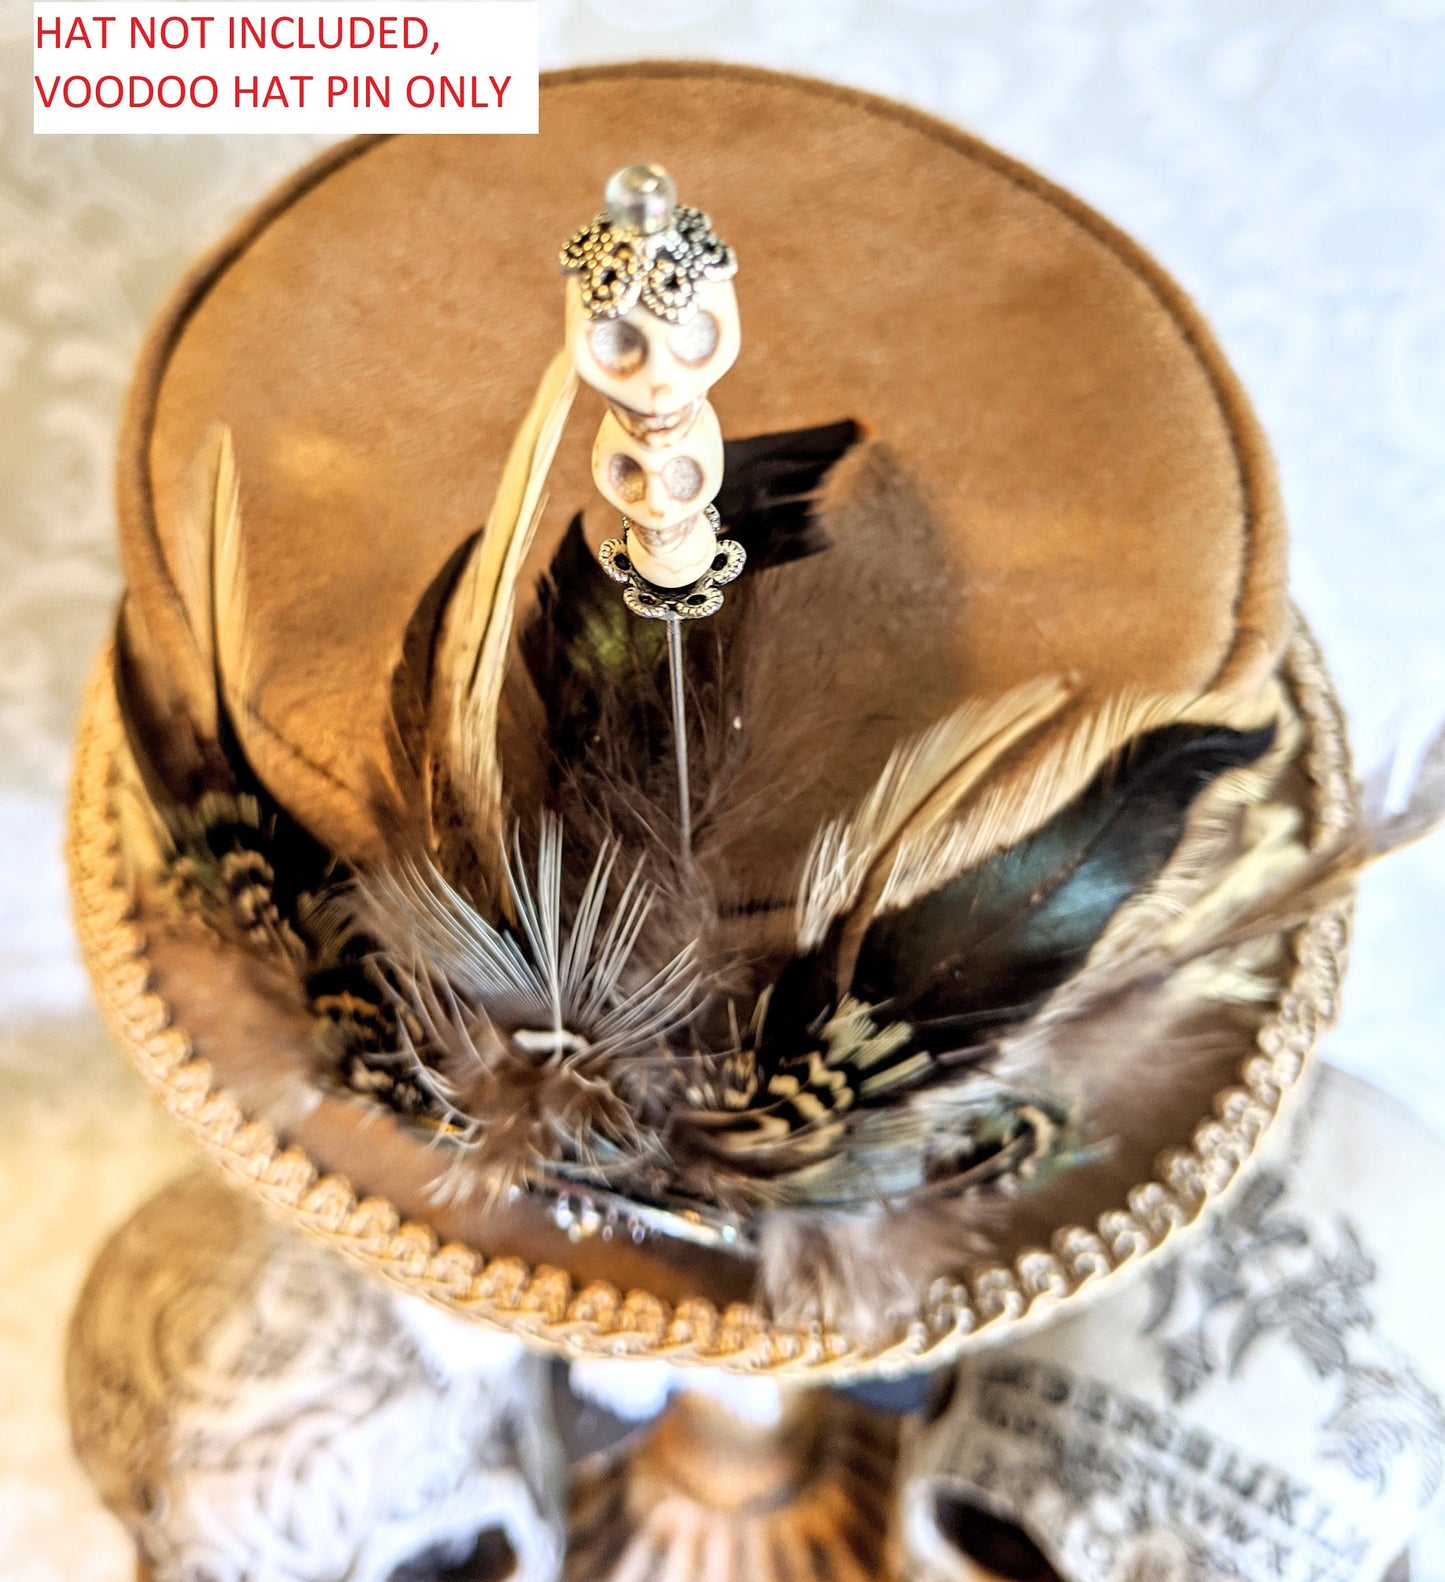 Voodoo Doll Hat Pin Decorative Stick Pin Large Size Skull